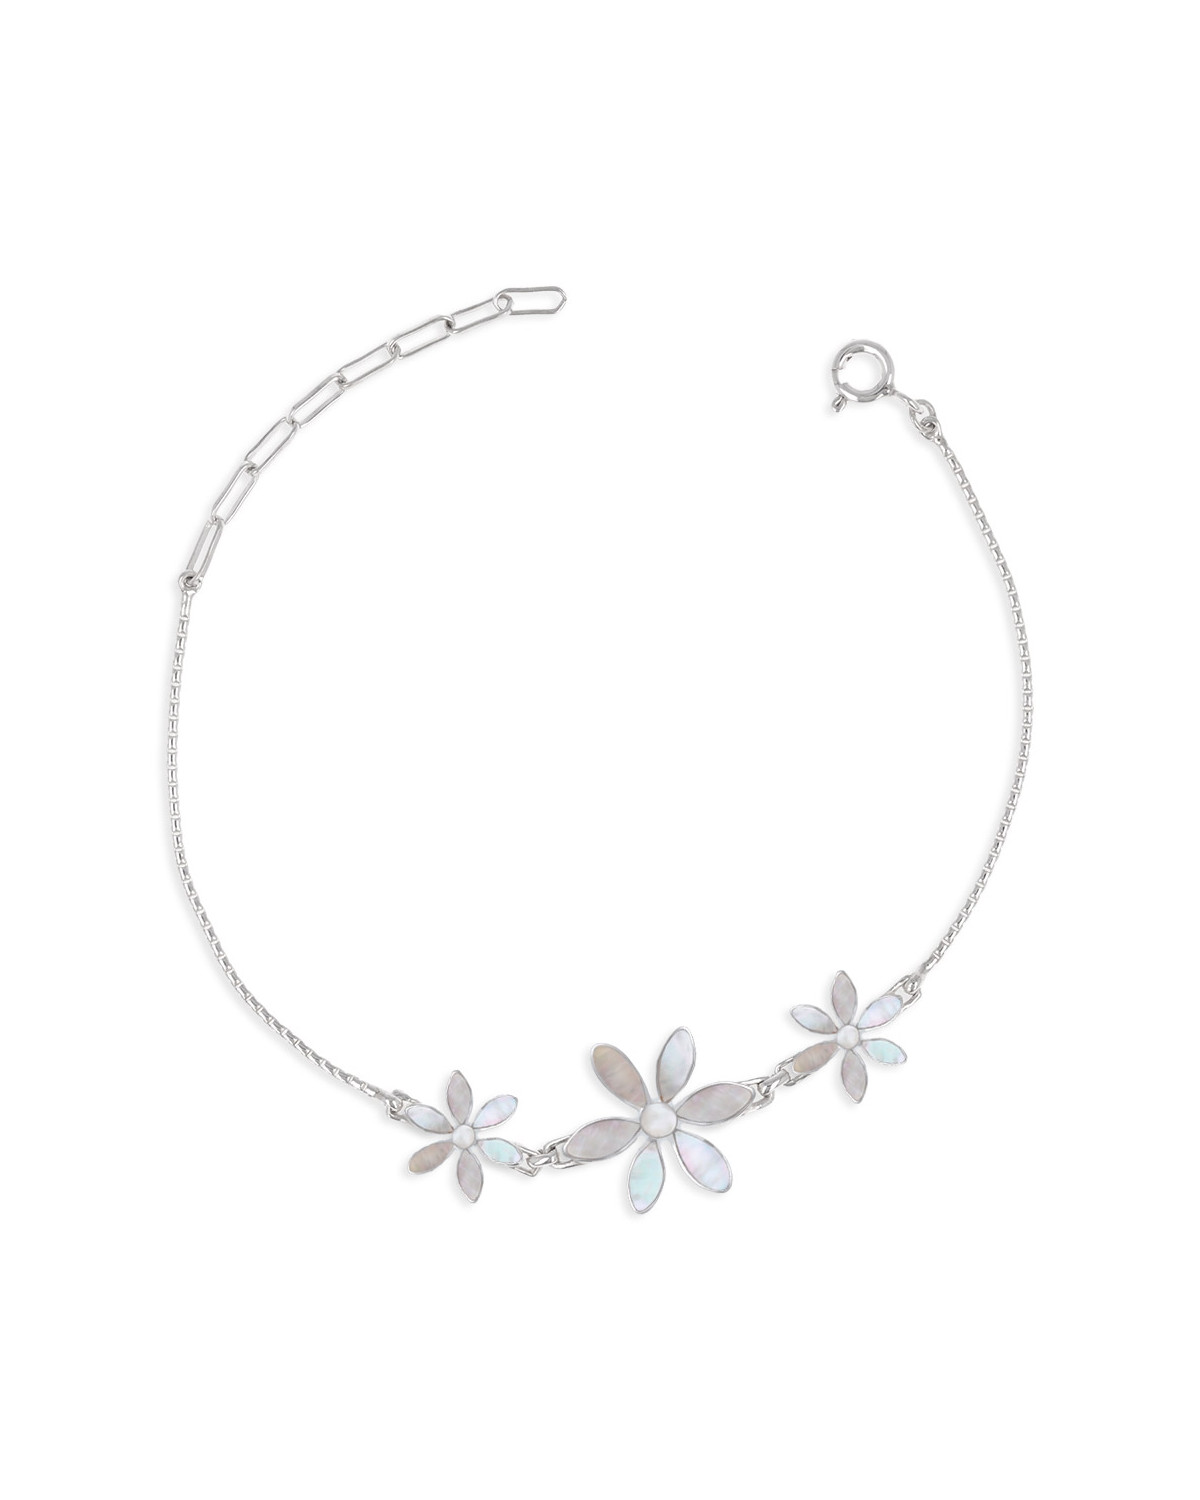 Adjustable bracelet Mother-of-pearl 3 flowers setting sterling silver 925